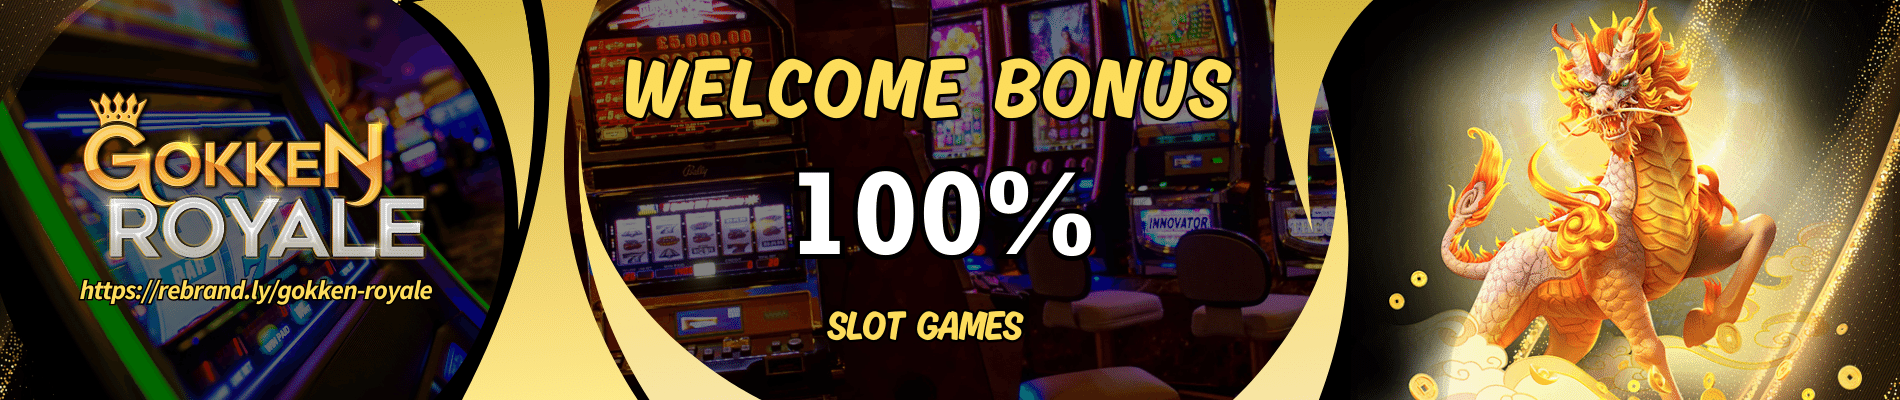 Welcome Bonus 100% | Slot Games